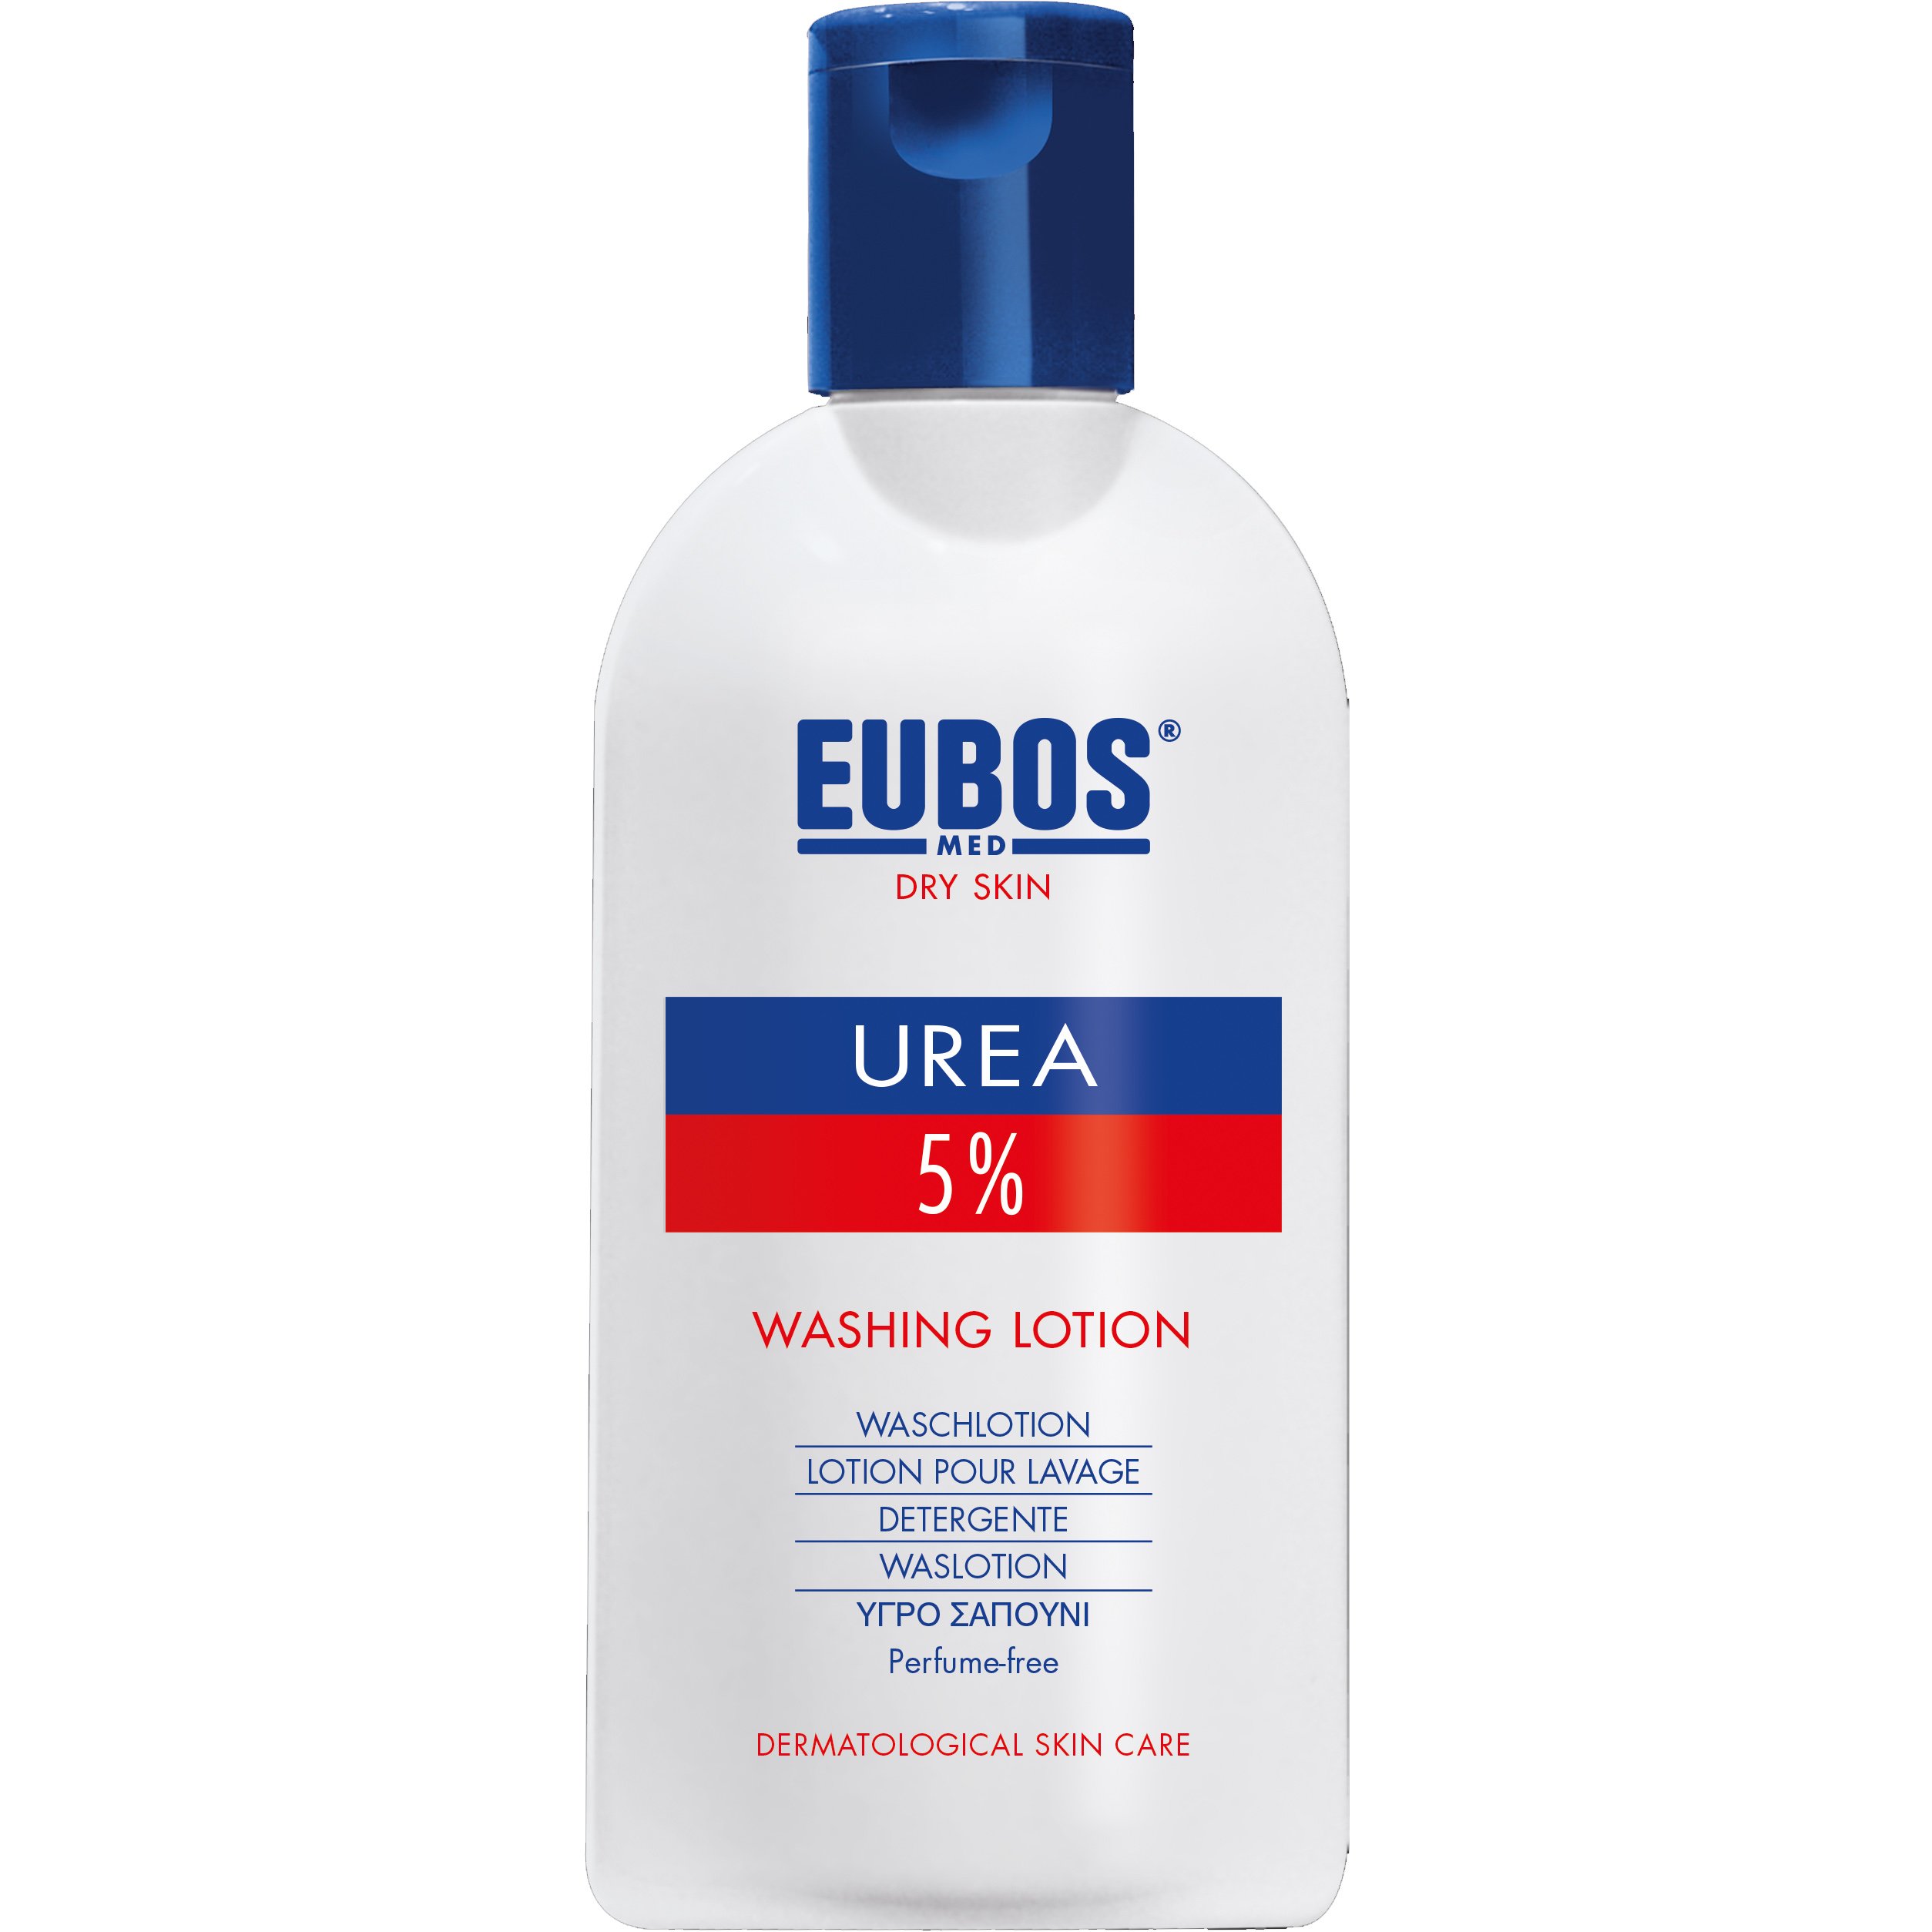 Eubos Urea 5% Washing Lotion Hydrolotion Υψηλή Περιποίηση του Ξηρού Δέρματος Κατά την Καθημερινή Χρήση 200ml